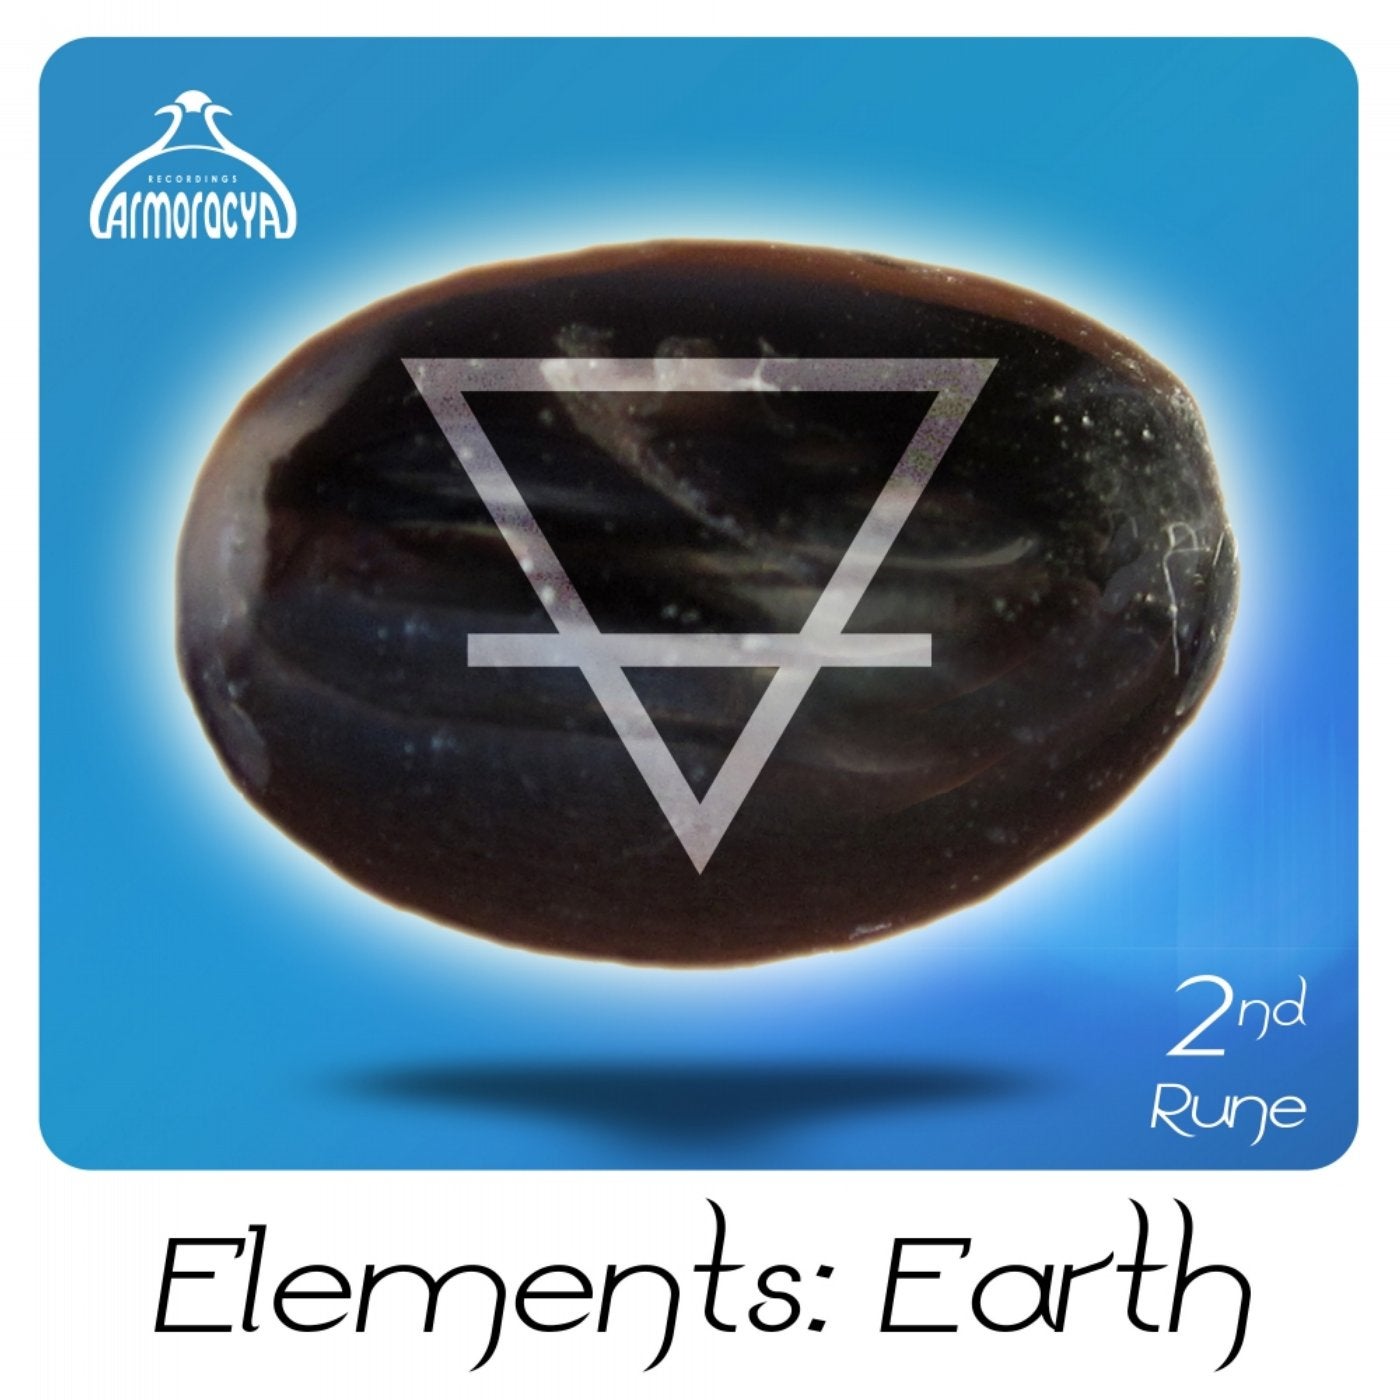 Elements: Earth 2nd Rune